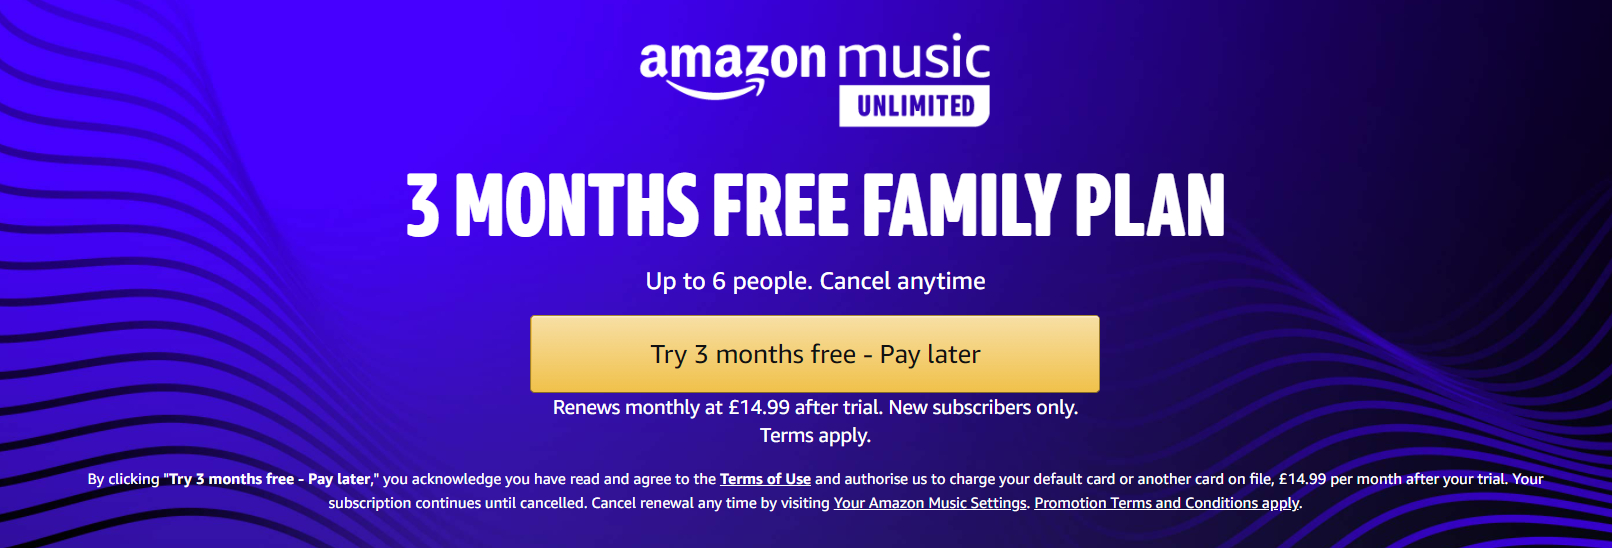 benefits of amazon music unlimited